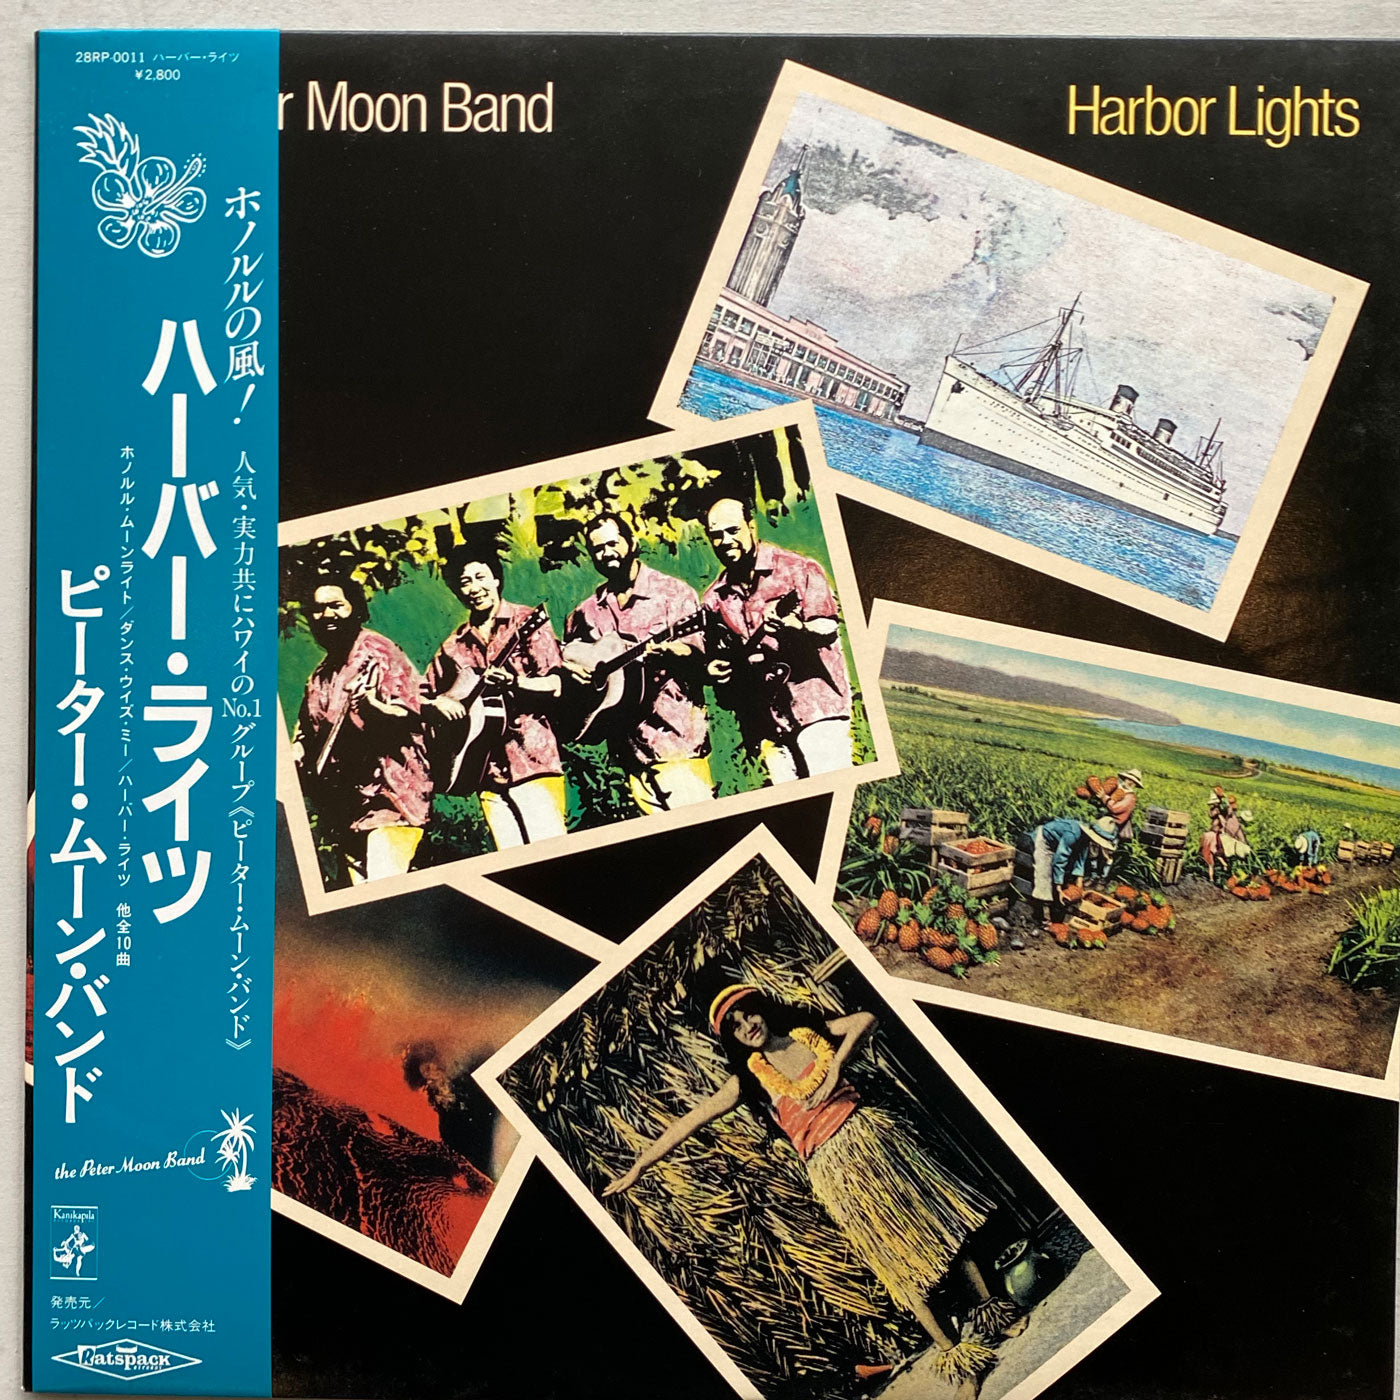 Peter Moon Band - Harbor Lights